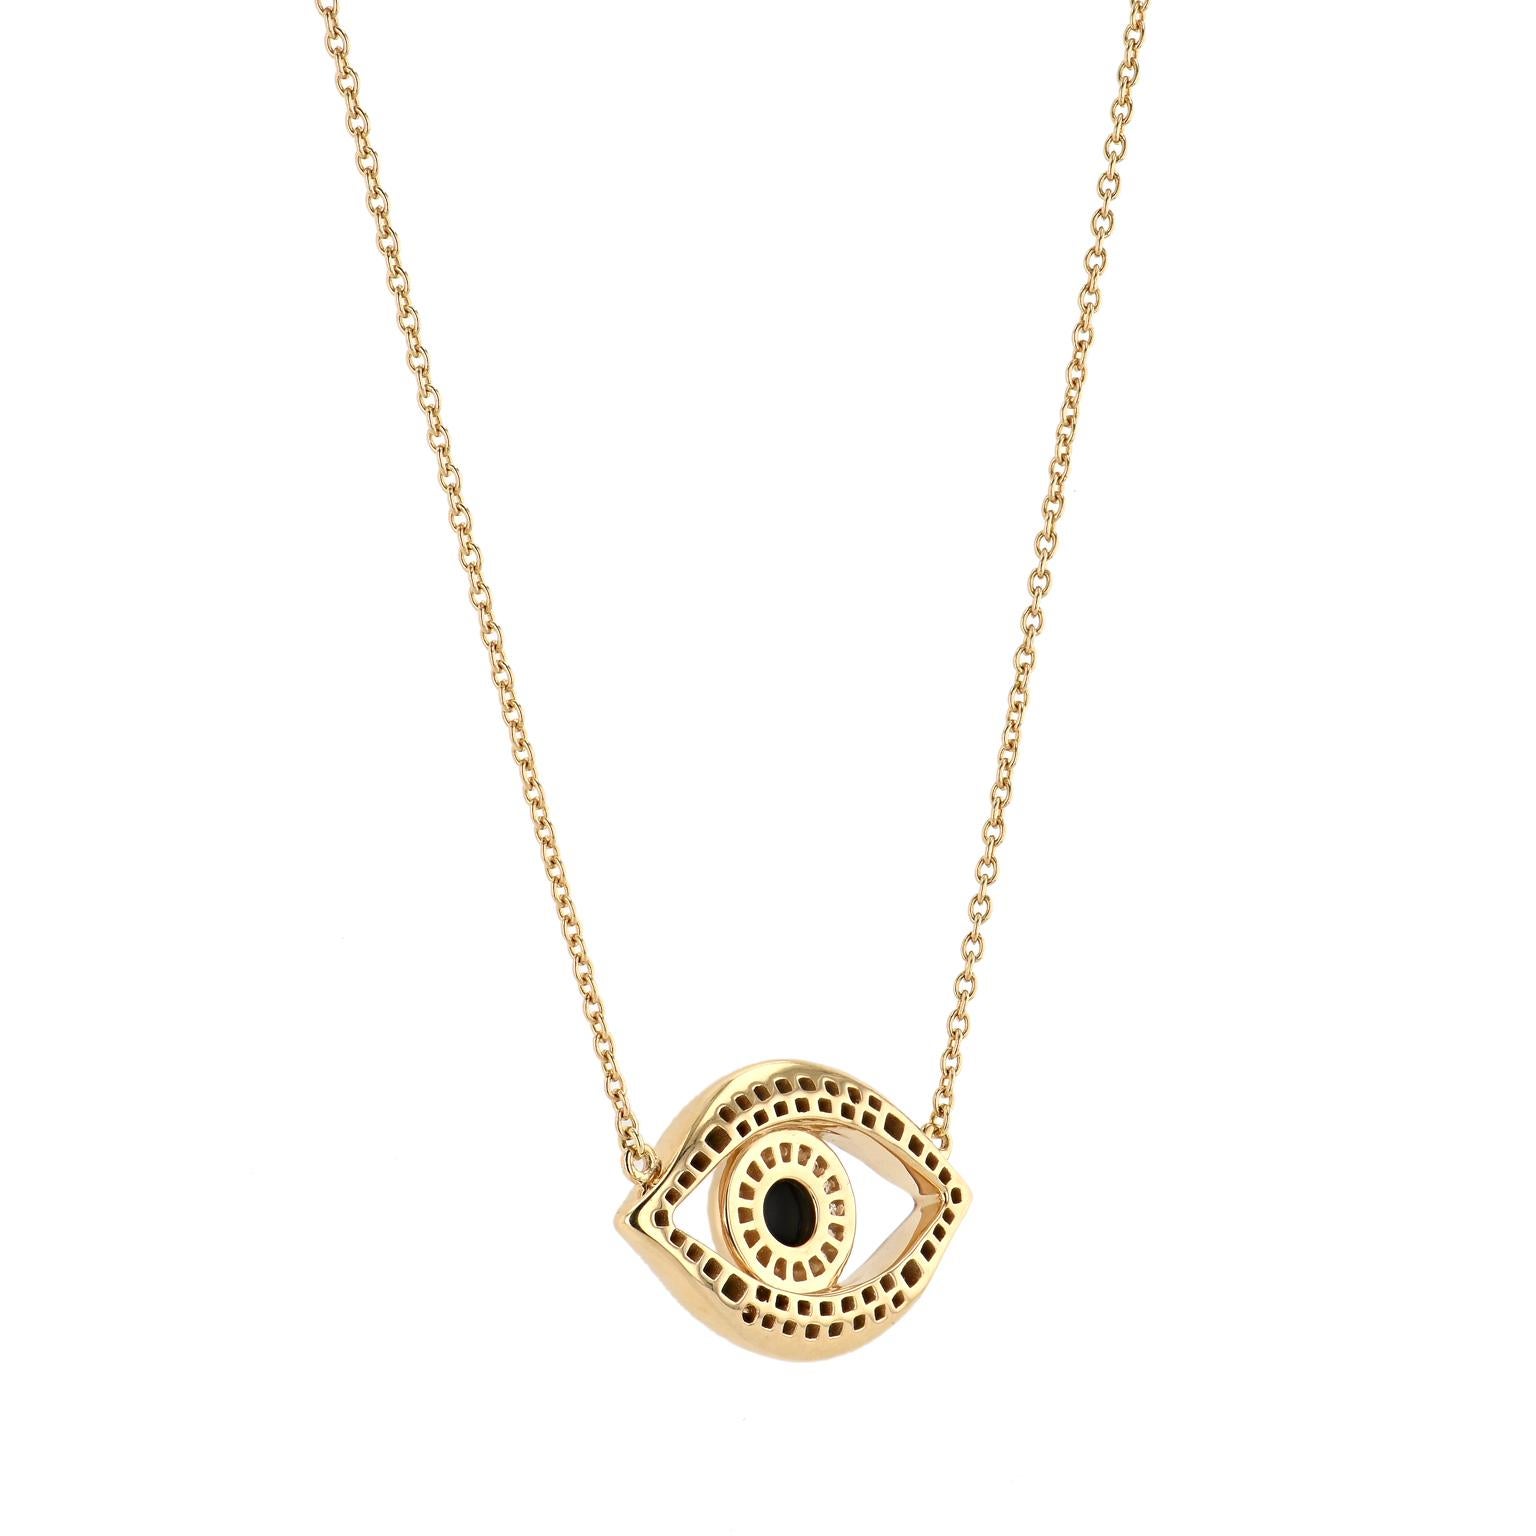 Round Cut Turquoise, Zircon and Diamond Evil Eye Pendant Set in 14 karat Gold 16-17 inches